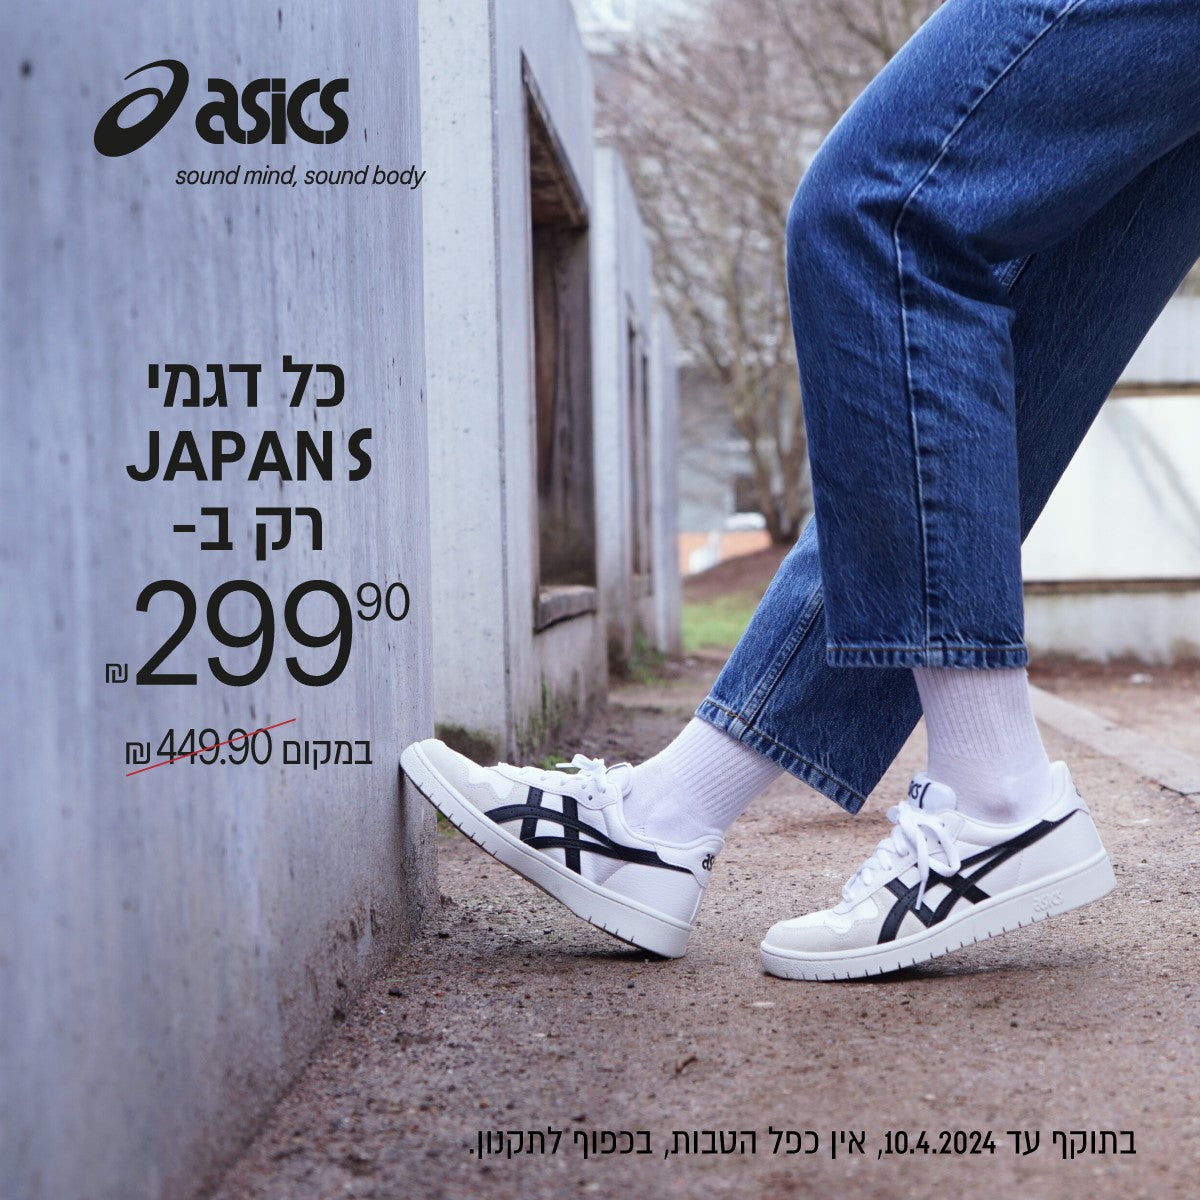 JAPAN SNEAKERS FOR 299.9